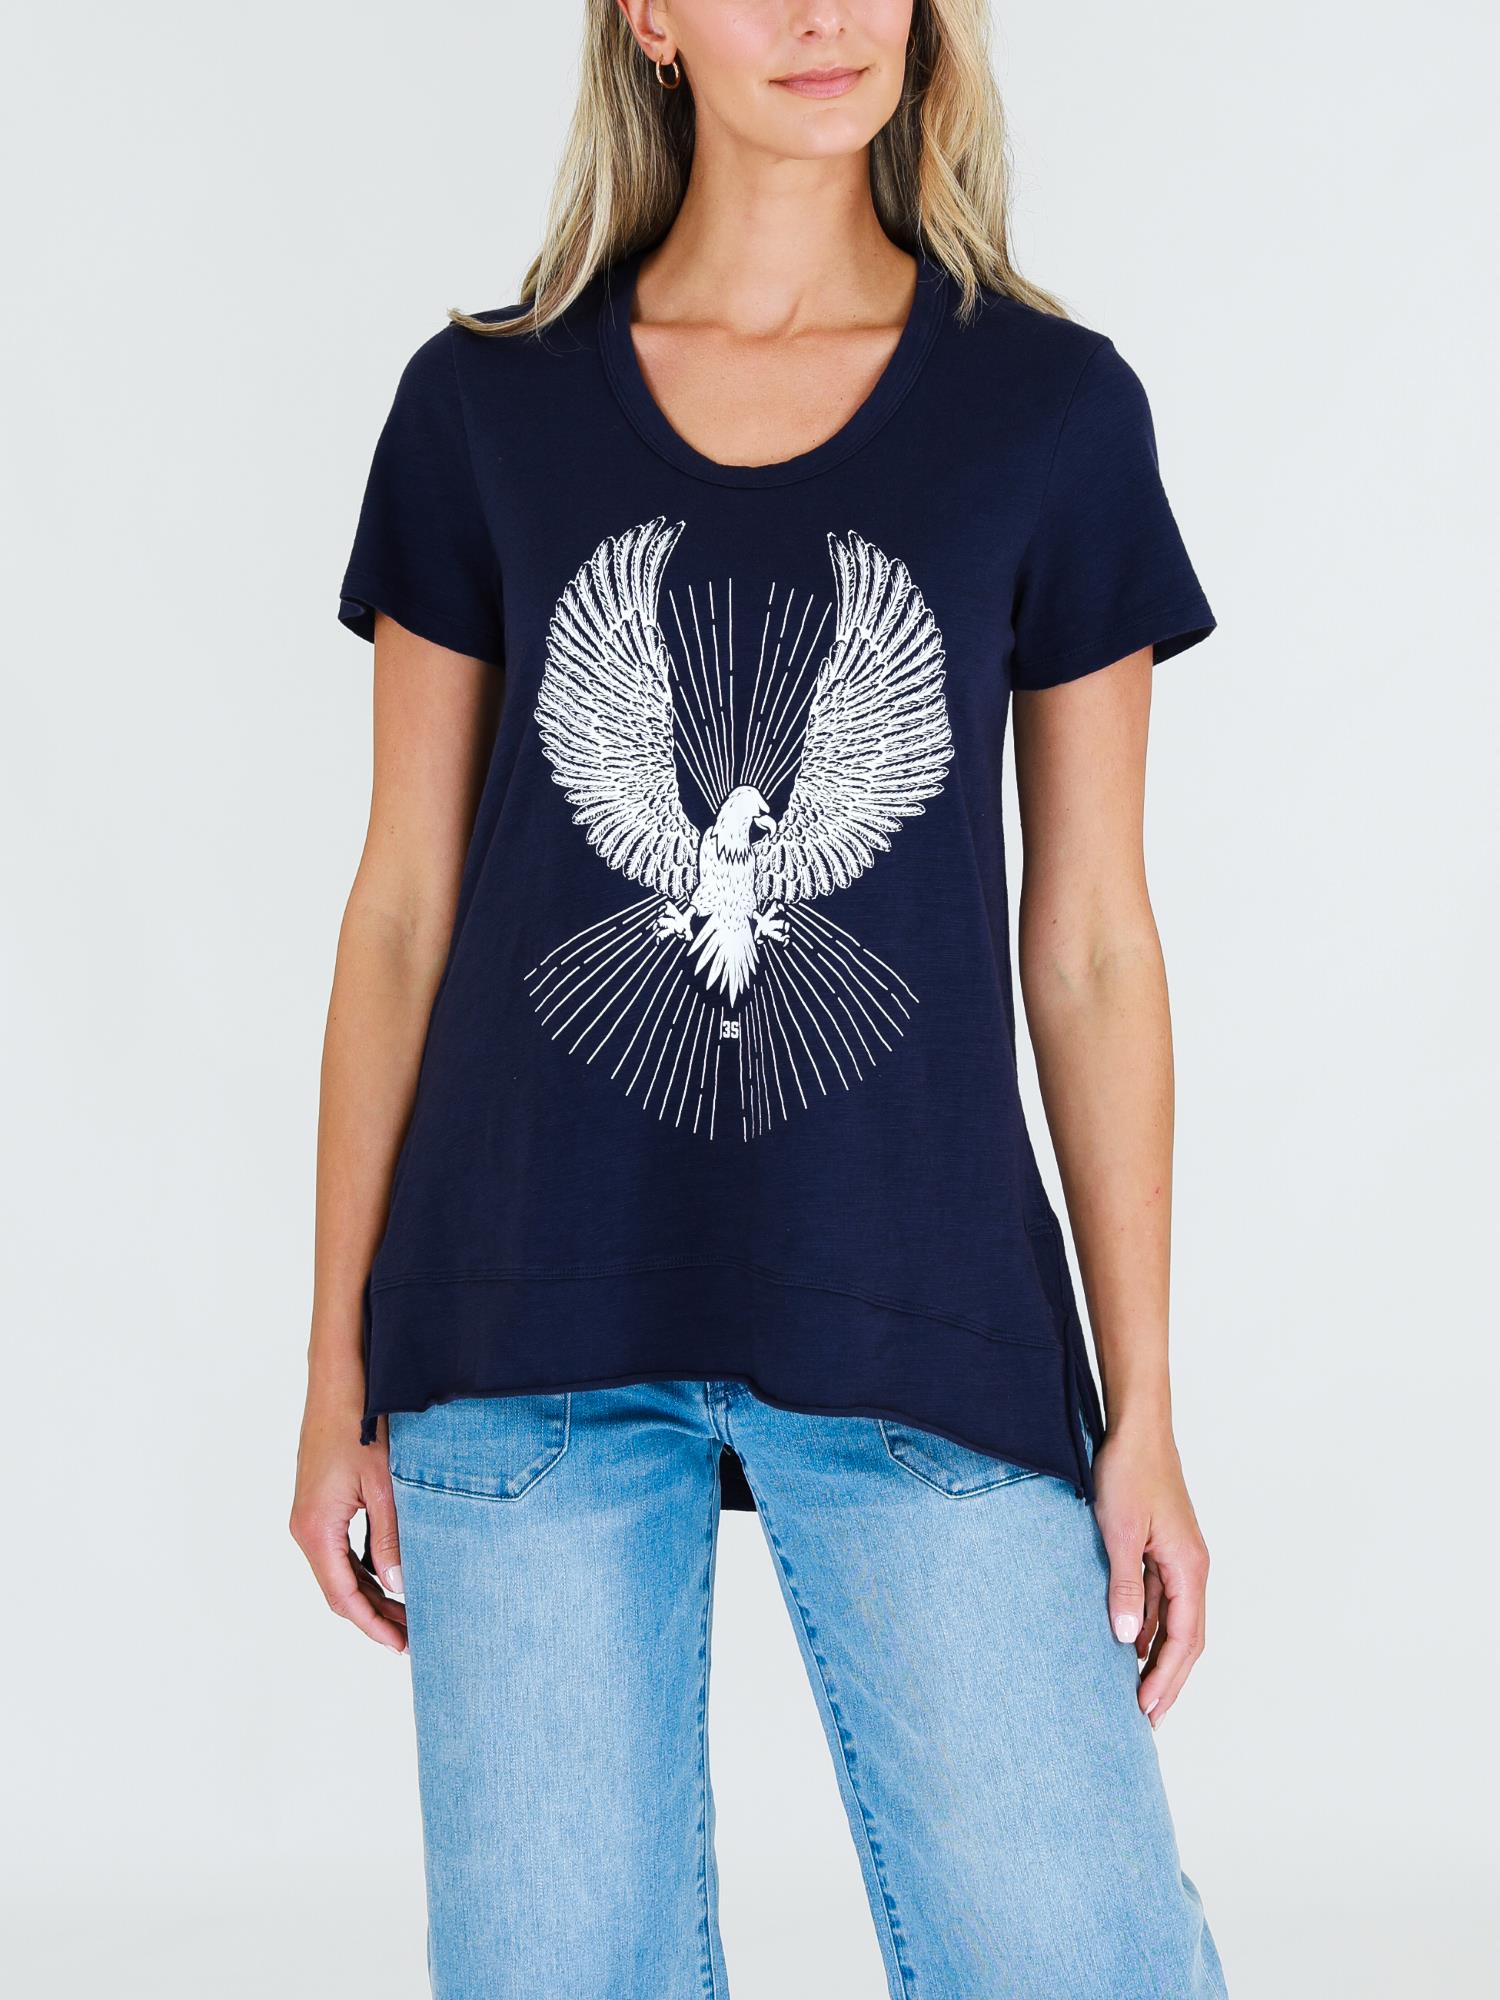 Eagles T Shirt Designs